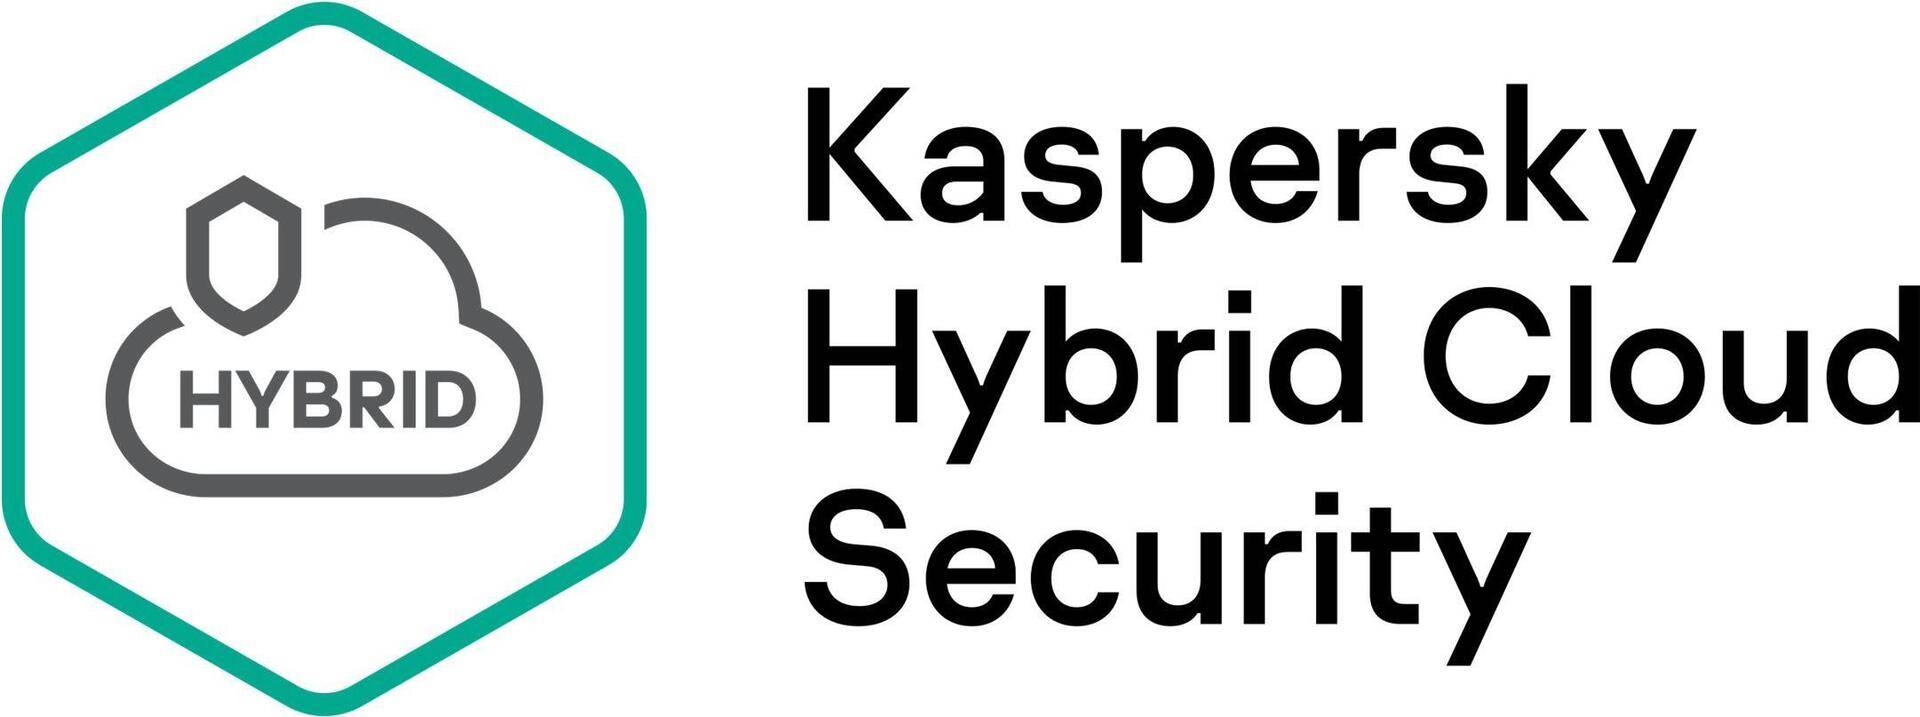 Kaspersky Hybrid Cloud Security Enterprise CPU European Edi. 250-499 CPU 3-Year Renewal License (KL4553XATTR) von Kaspersky Lab